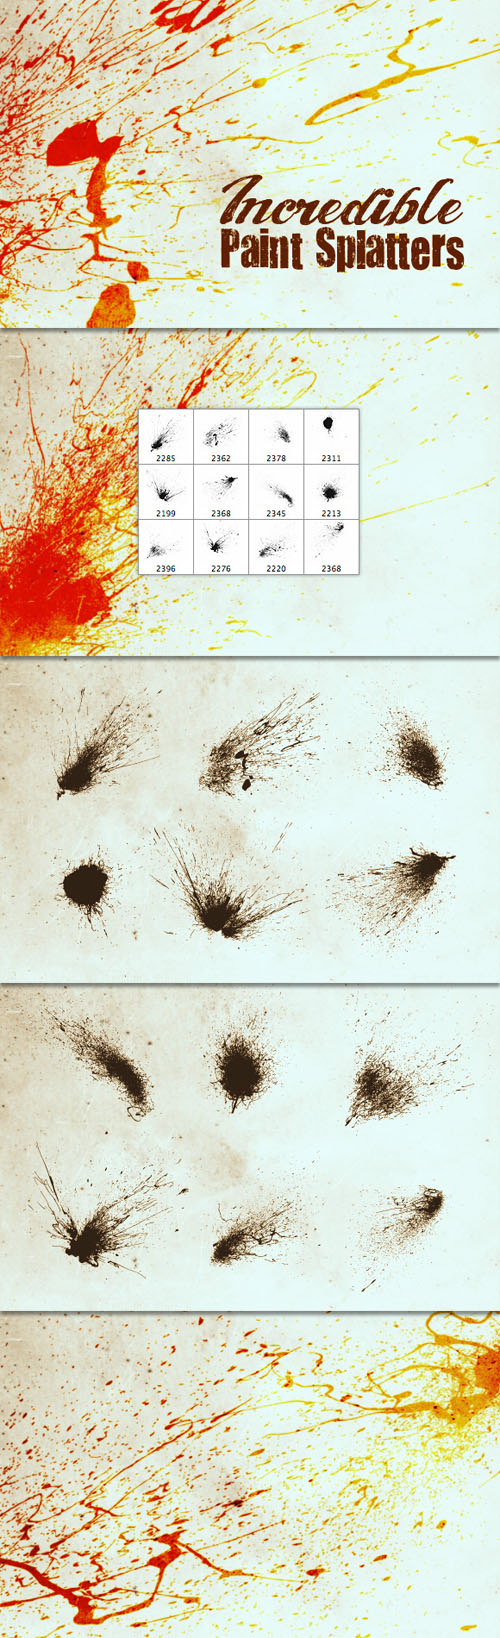 WeGraphics - Incredible Paint Splatter Vectors and Brushes